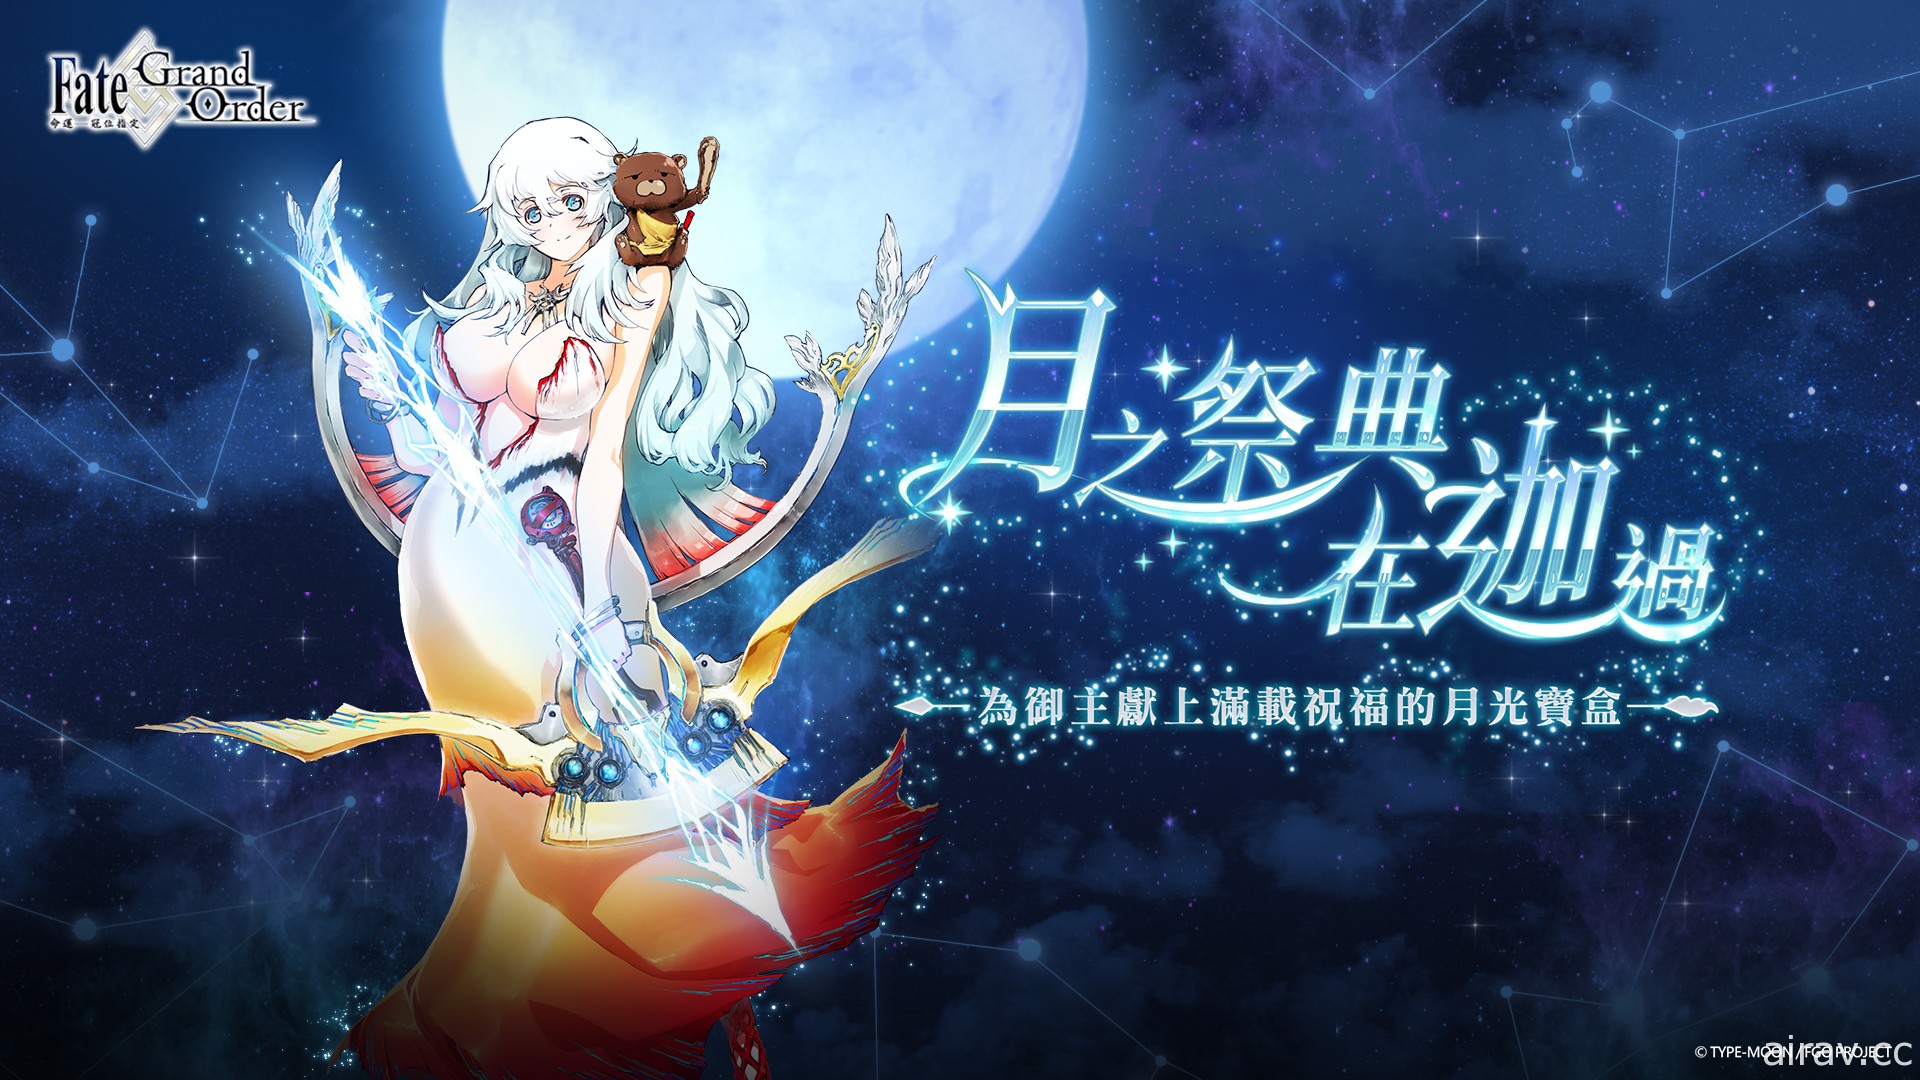 《Fate/Grand Order》繁中版將於 9 月 21 日舉辦迦勒底中秋節紀念活動